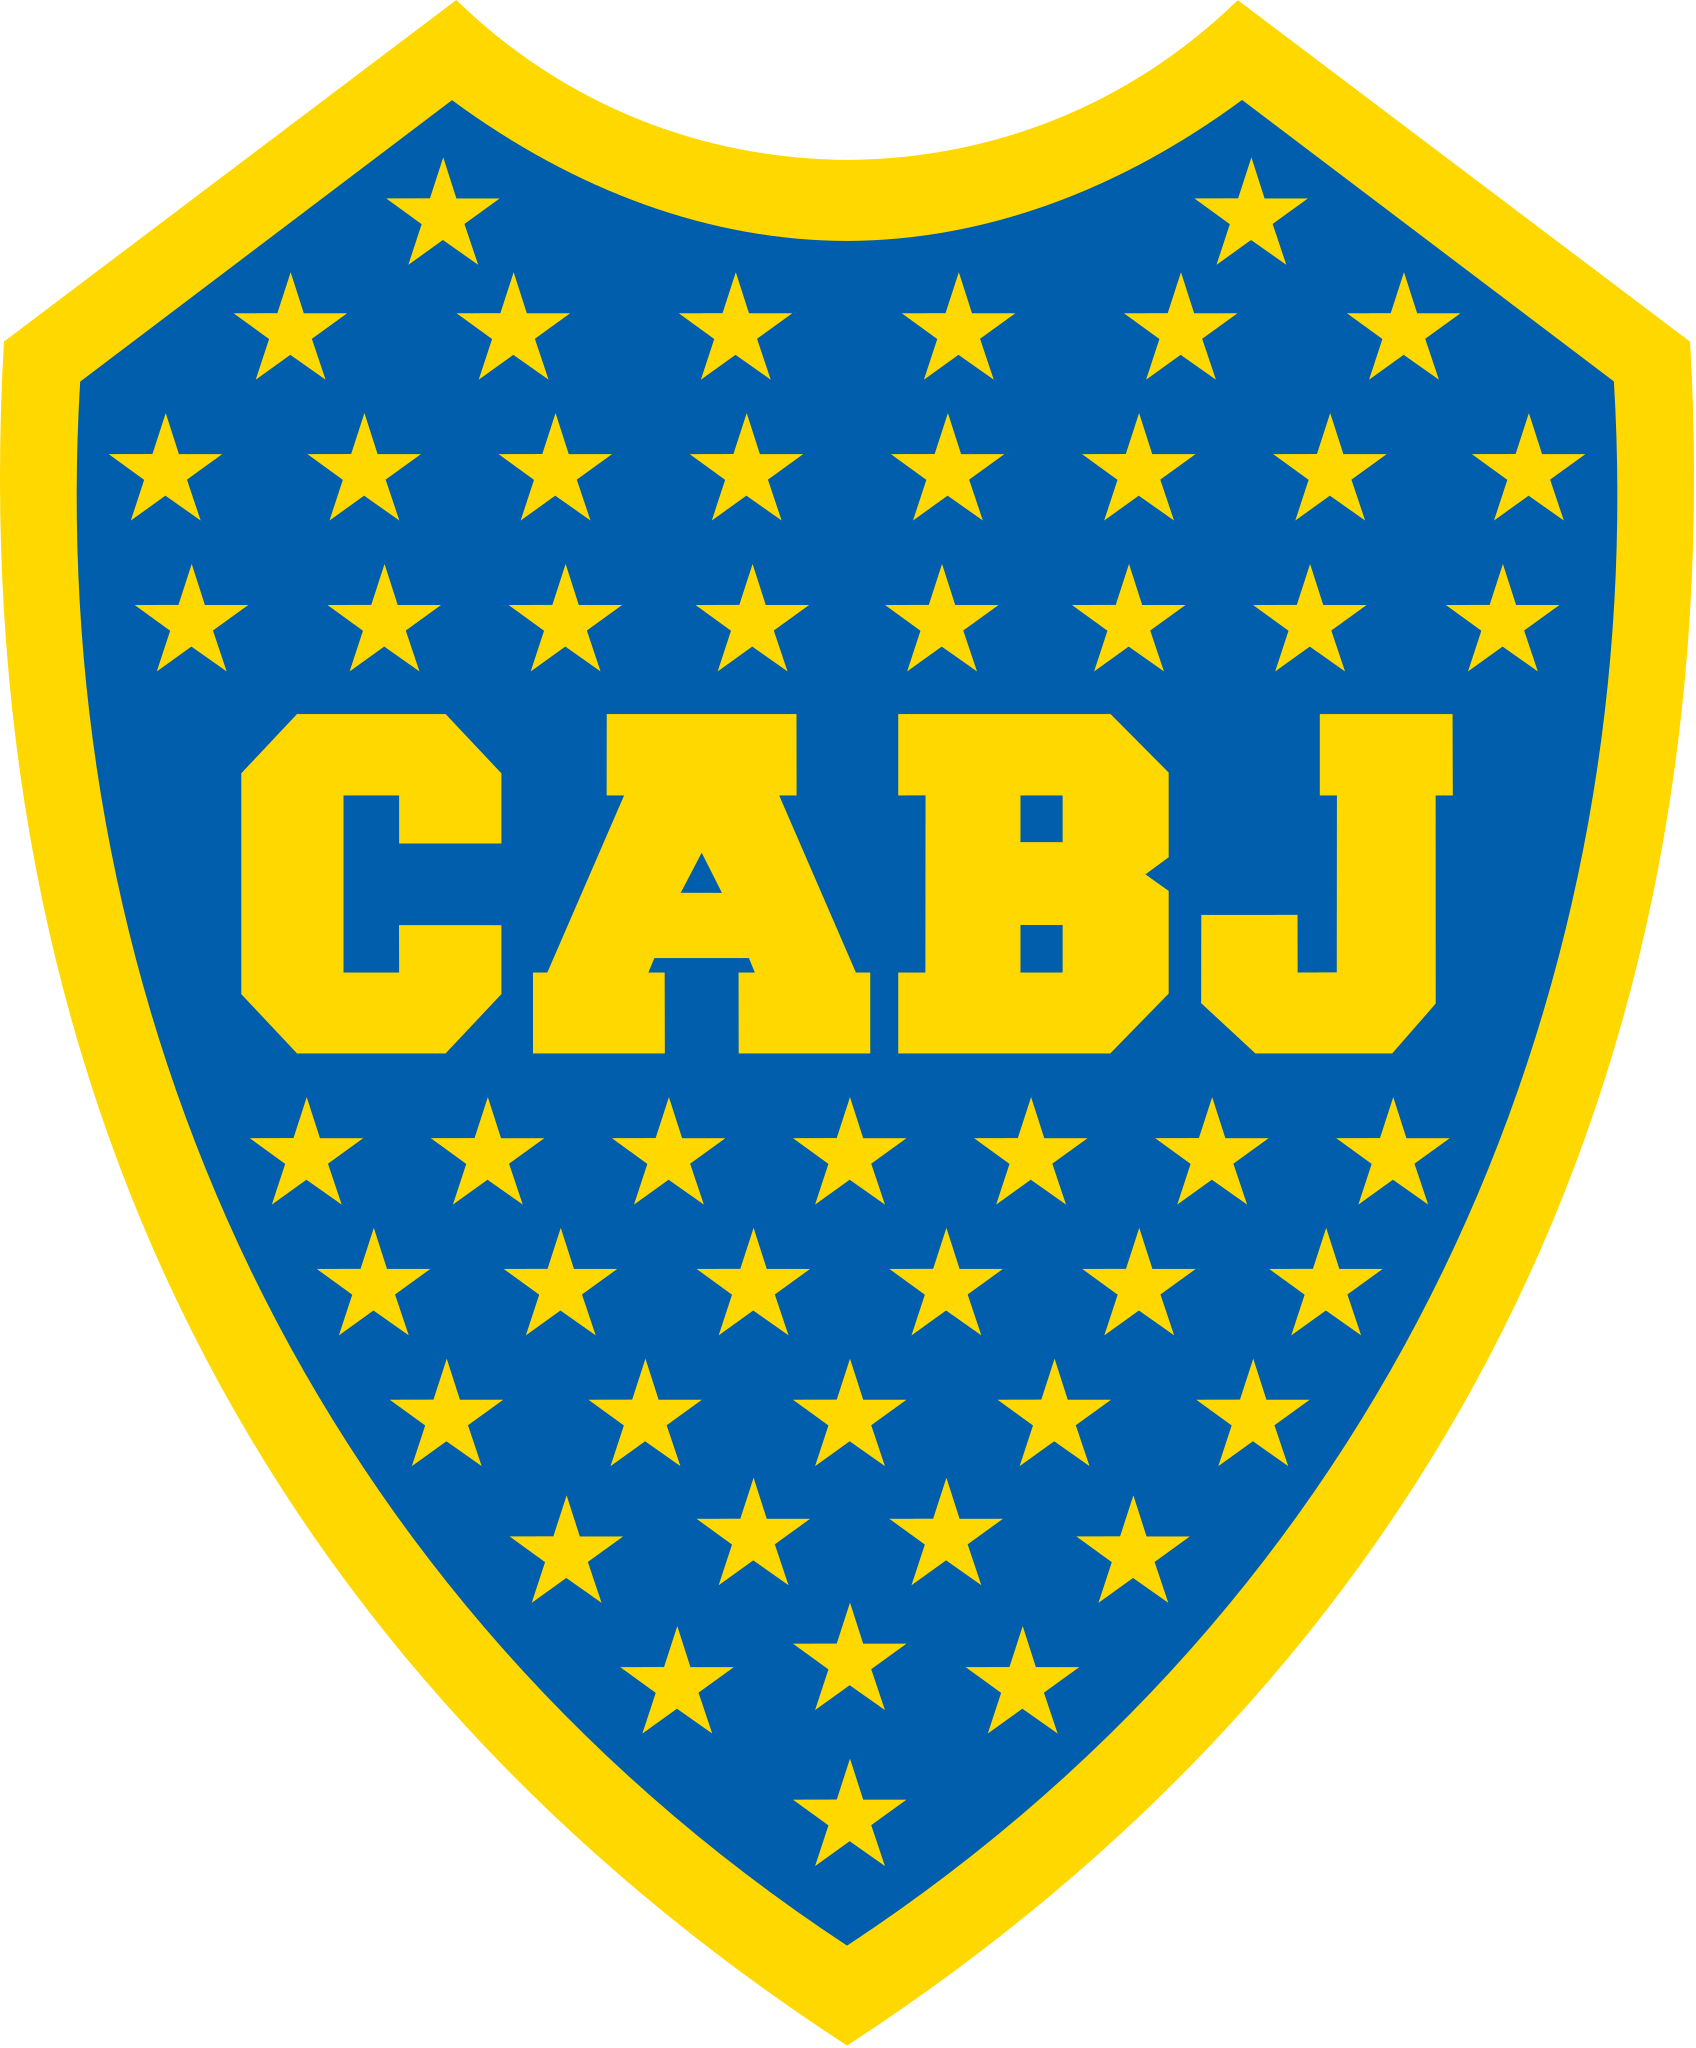 File:Escudo del Club Atlético Independiente de Avellaneda.svg - Wikipedia